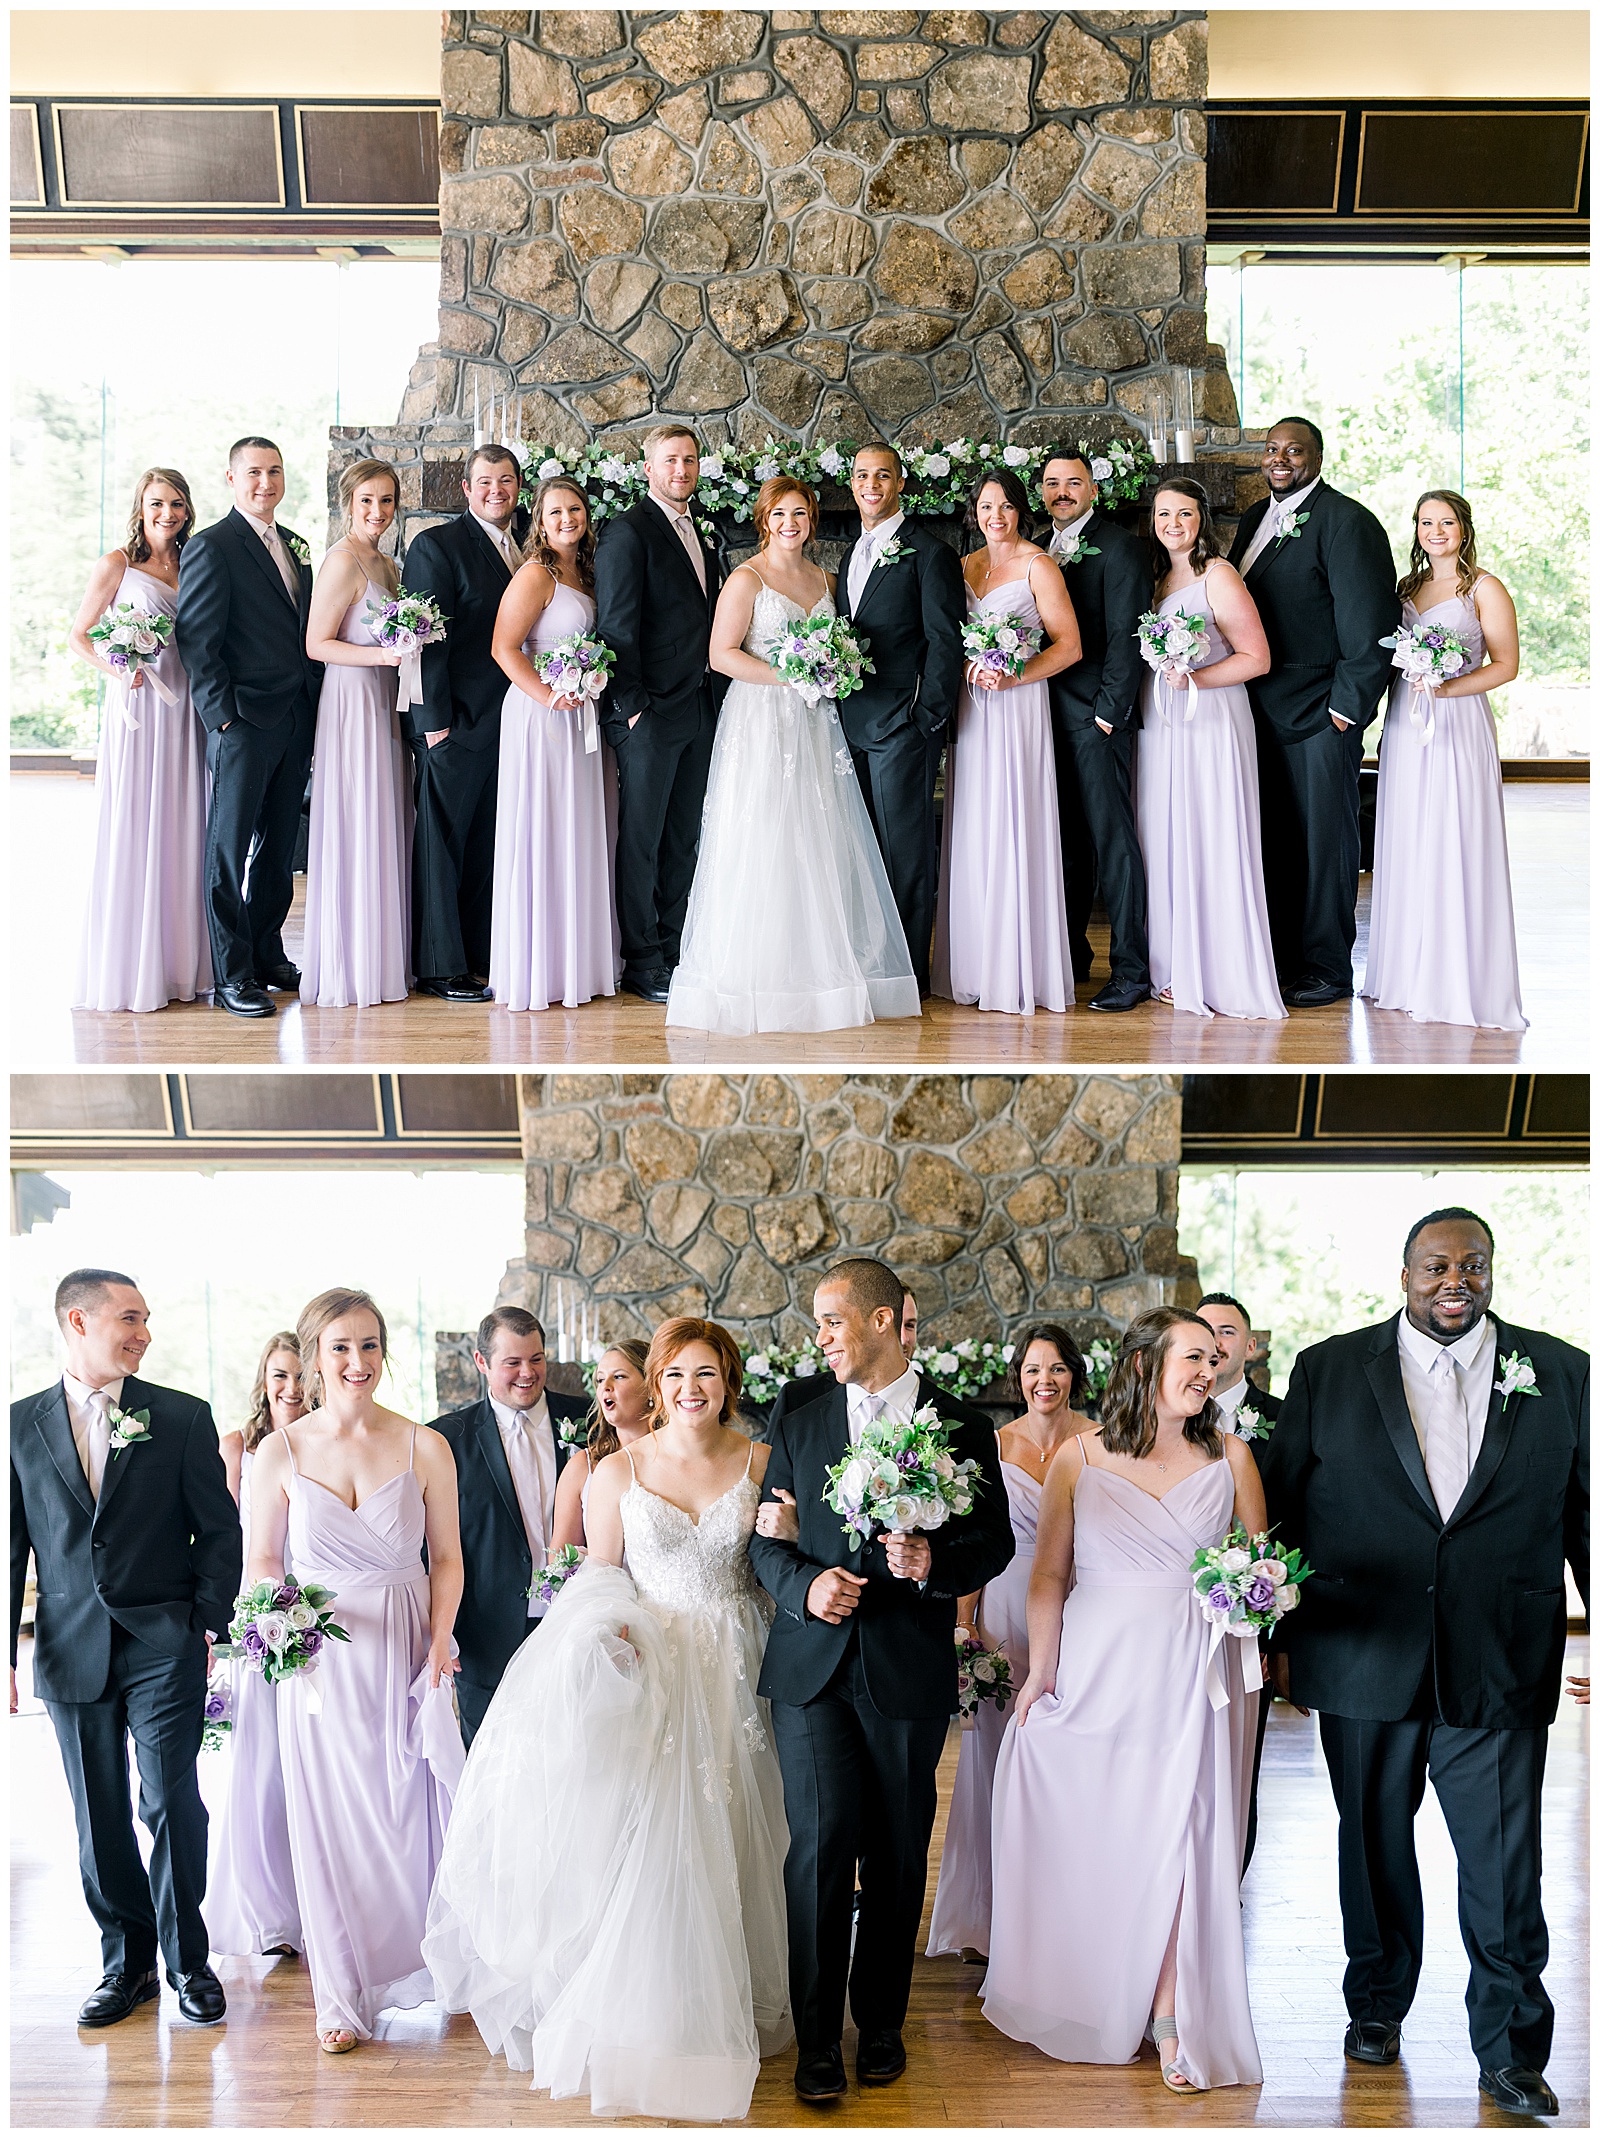 MeganNick_Abby'sFavorites_0061_North-River-Yacht-Club-Tuscaloosa-Wedding-Birmingham-Alabama-Wedding-Photographers-Abby-Bates-Photography.jpg